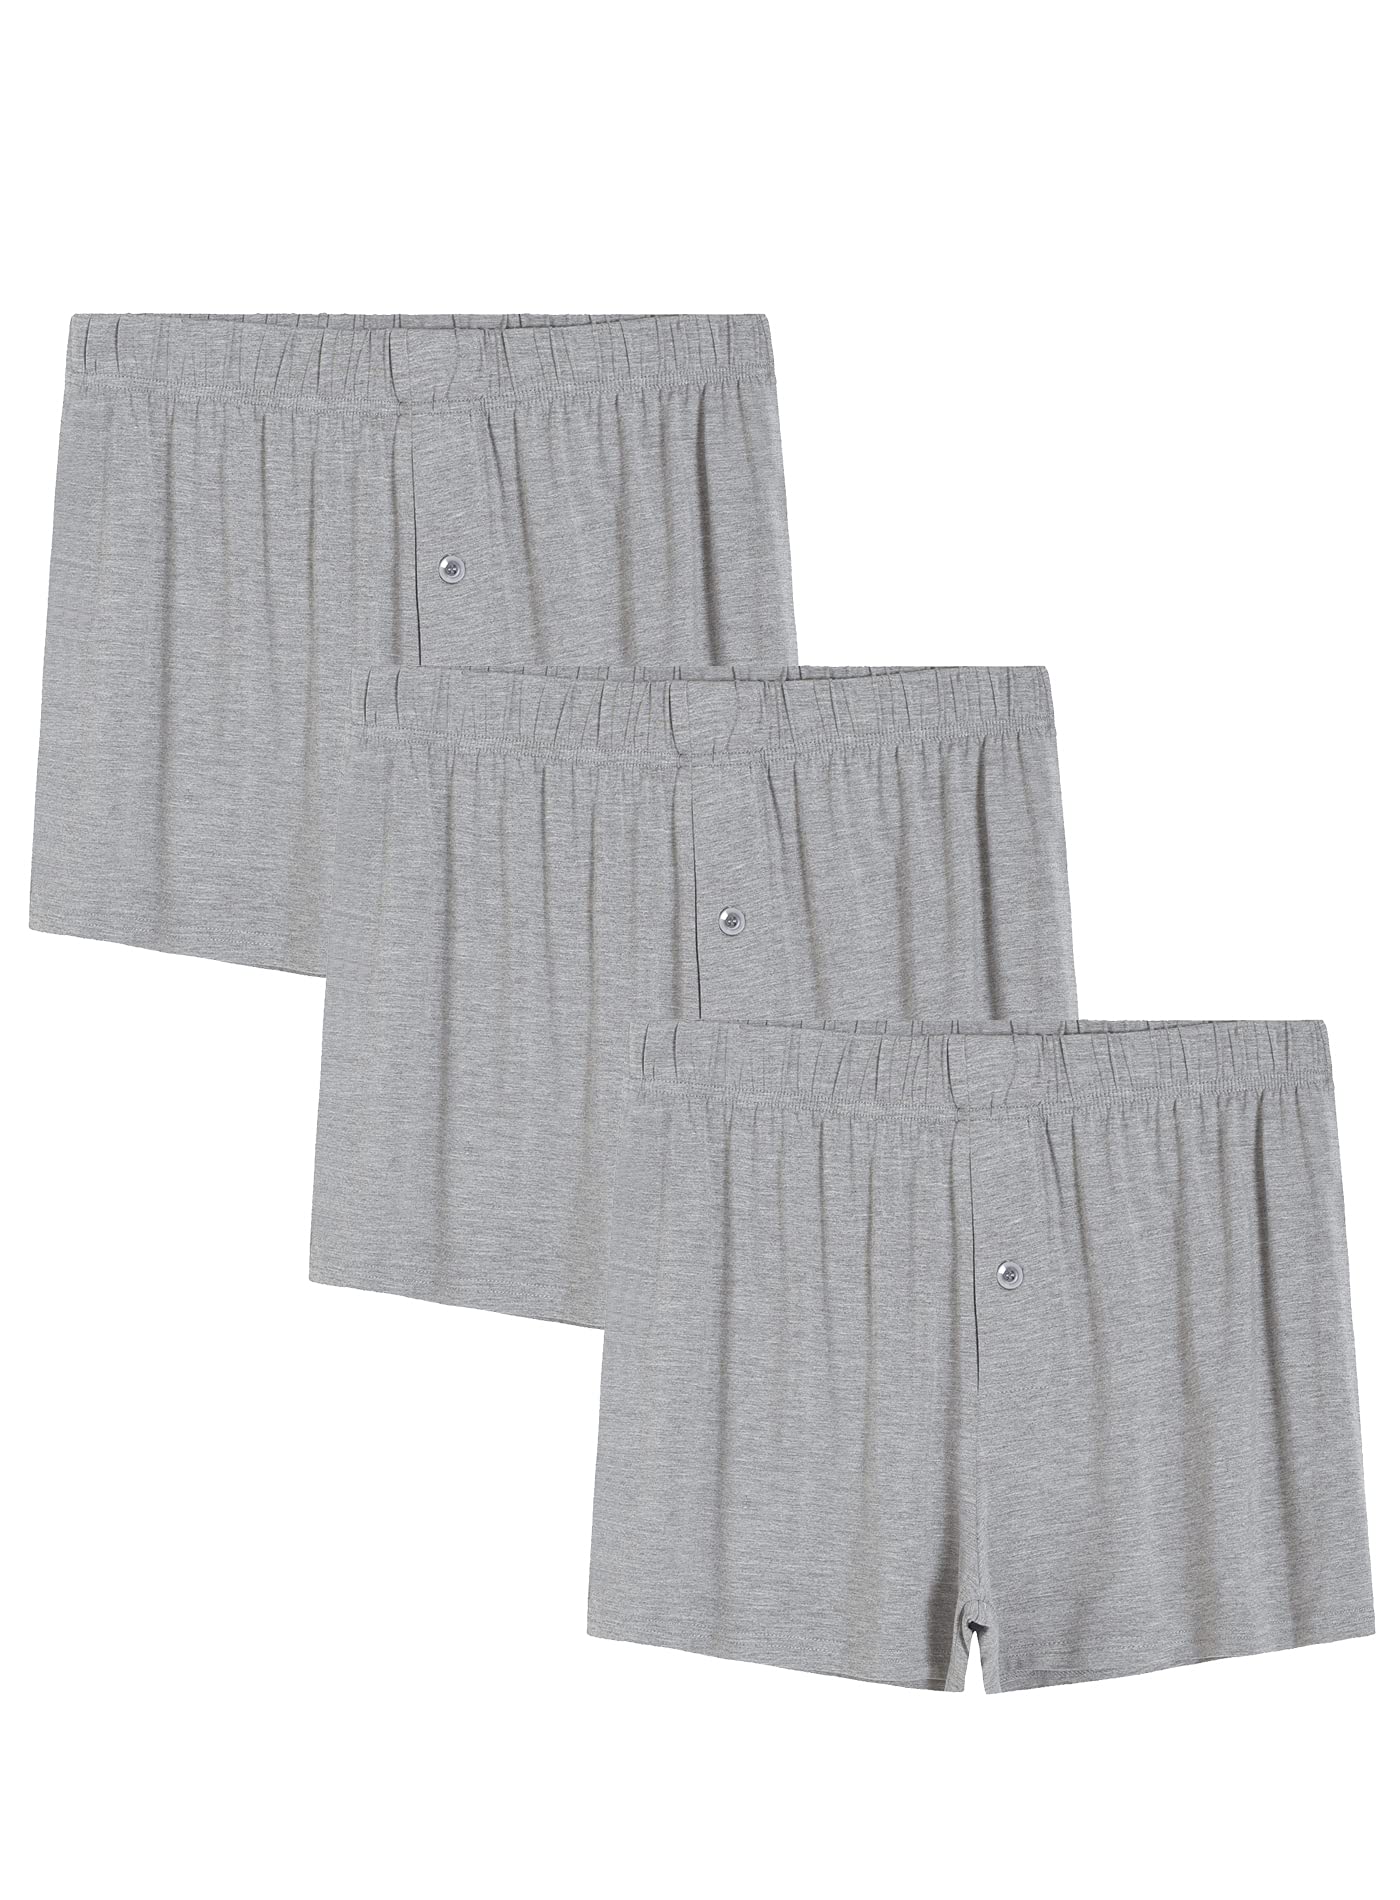 Men's Bamboo Viscose Underwear Boxer Shorts Trunk Briefs 3 Pack - Latuza